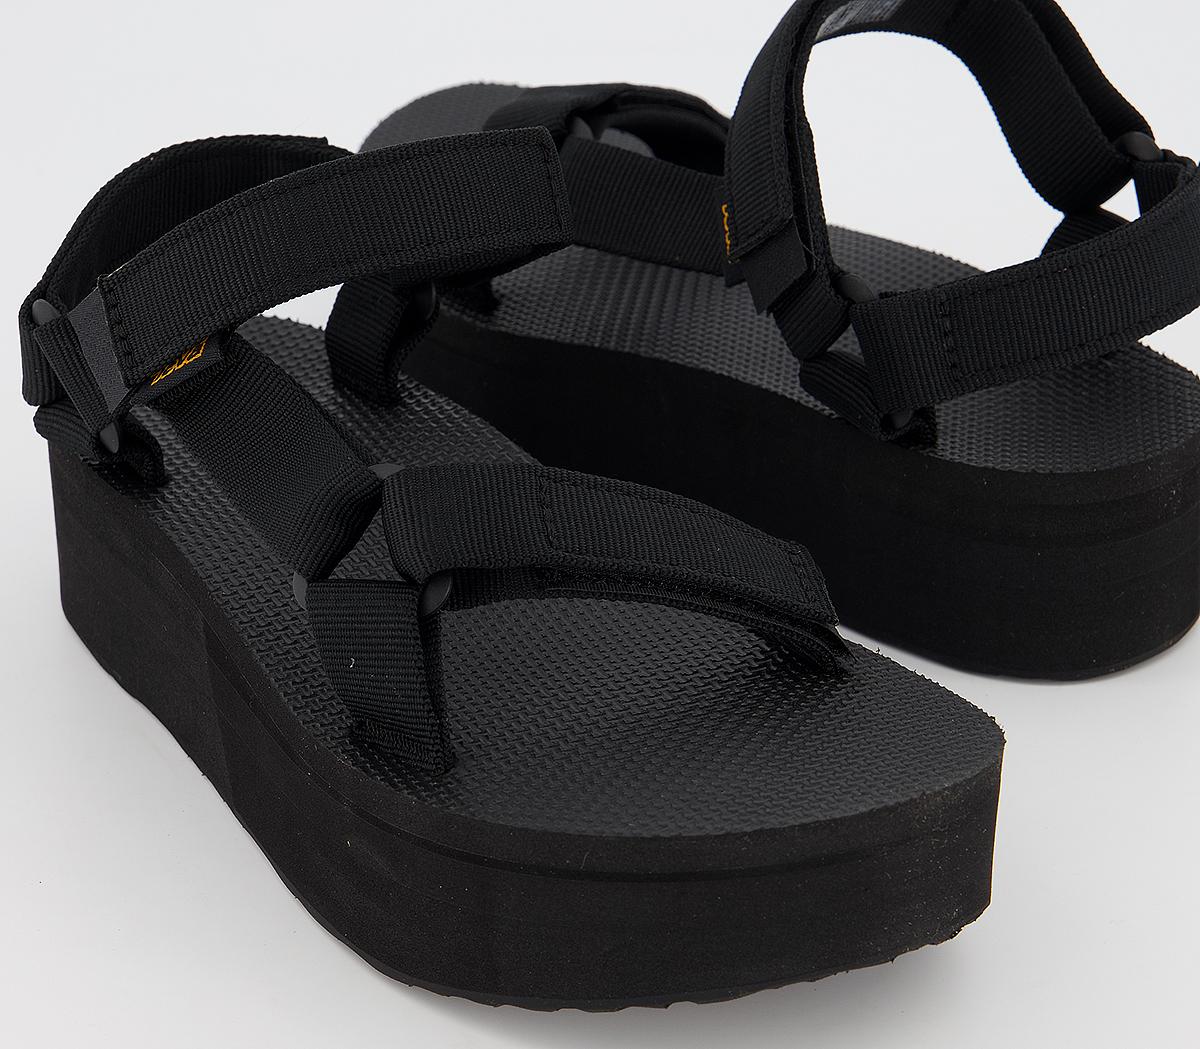 Teva Flatform Universal Sandals Black - Women’s Sandals